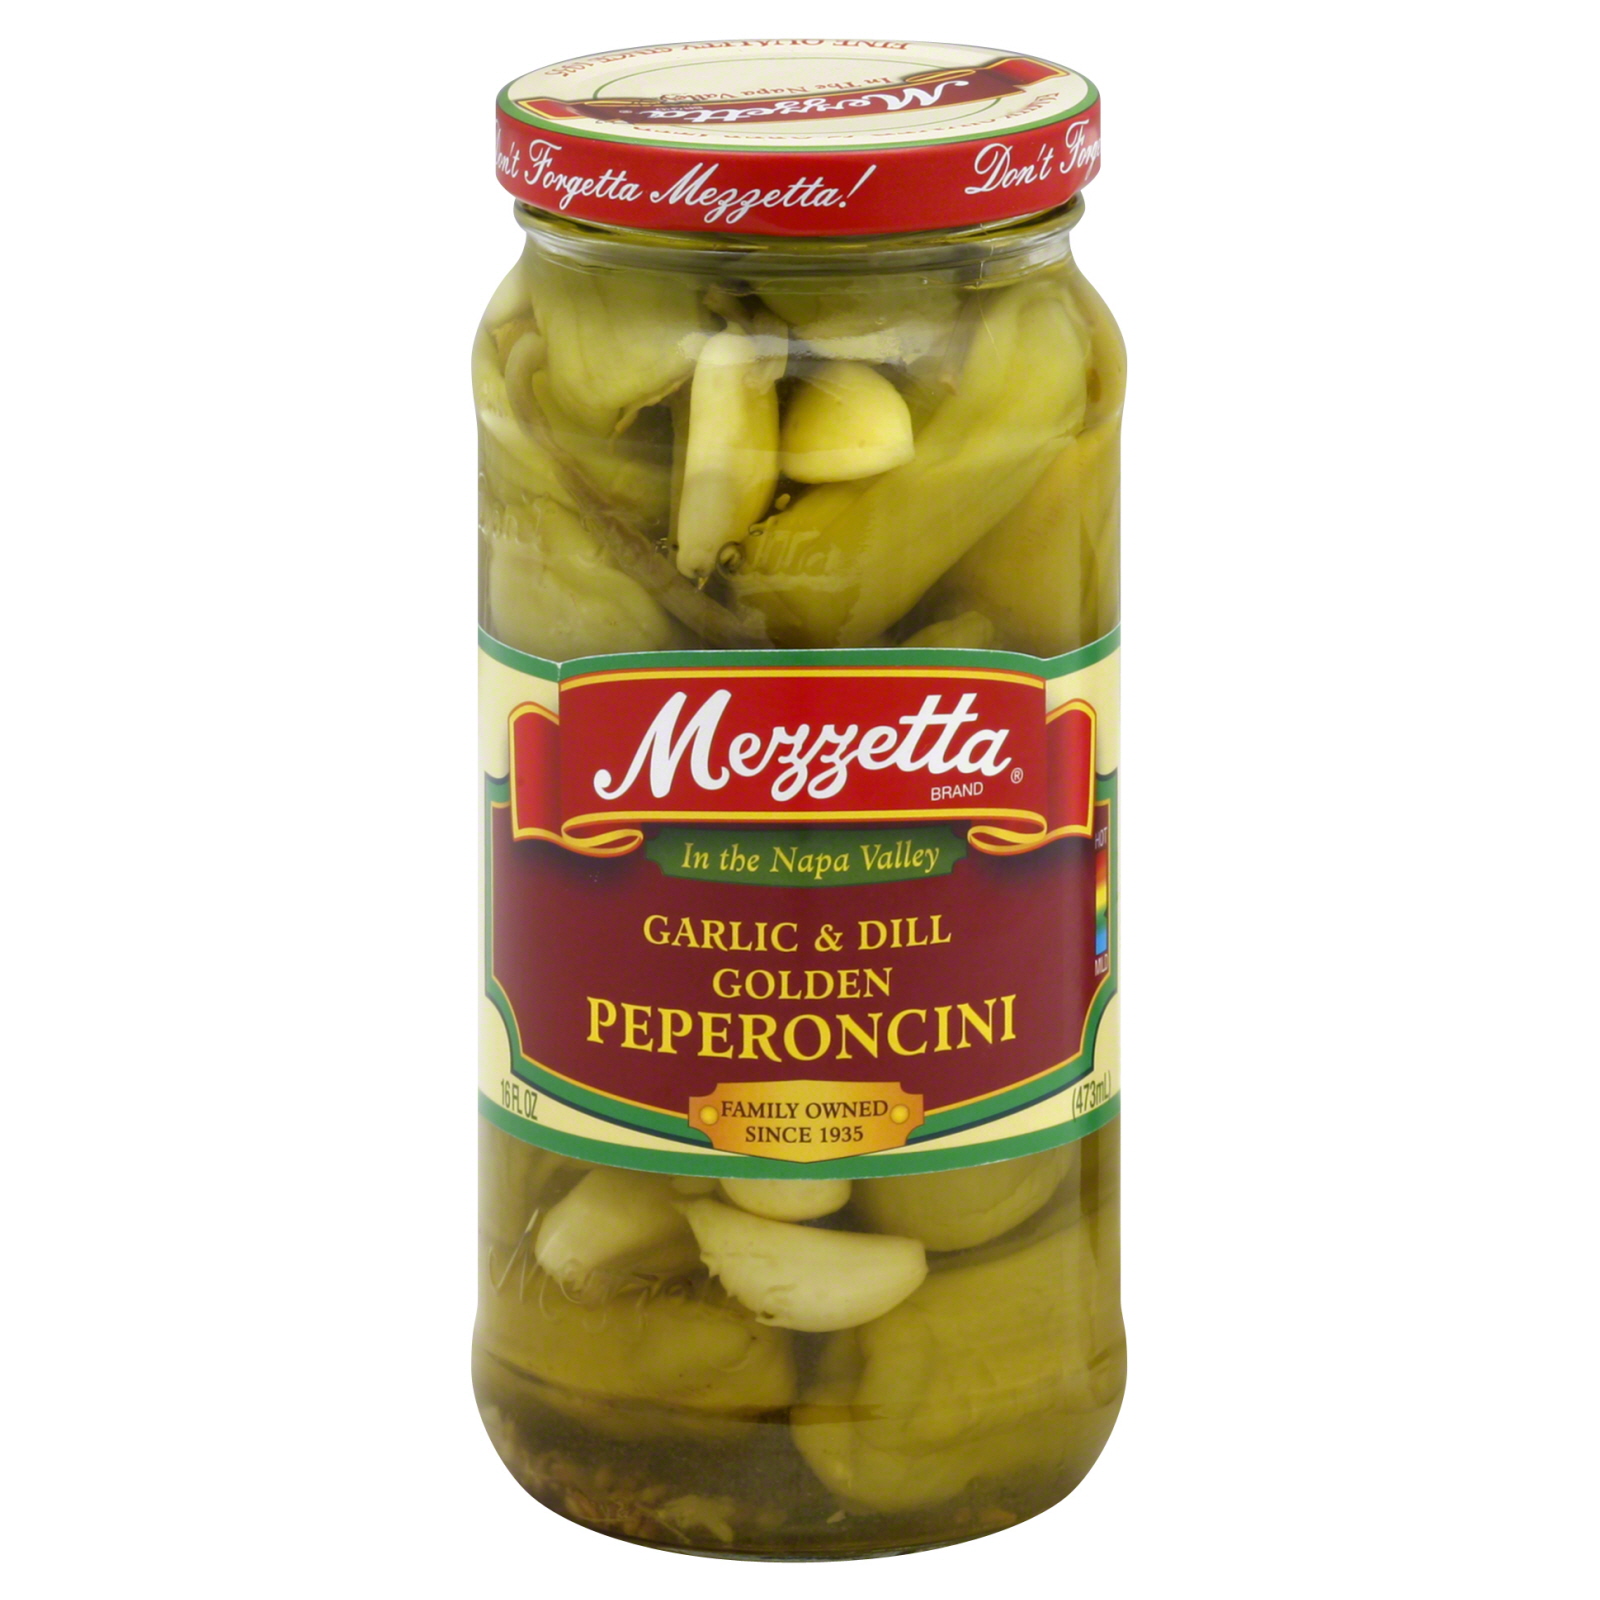 Mezzetta Golden Peperoncini, Garlic & Dill, 16 fl oz (473 ml)